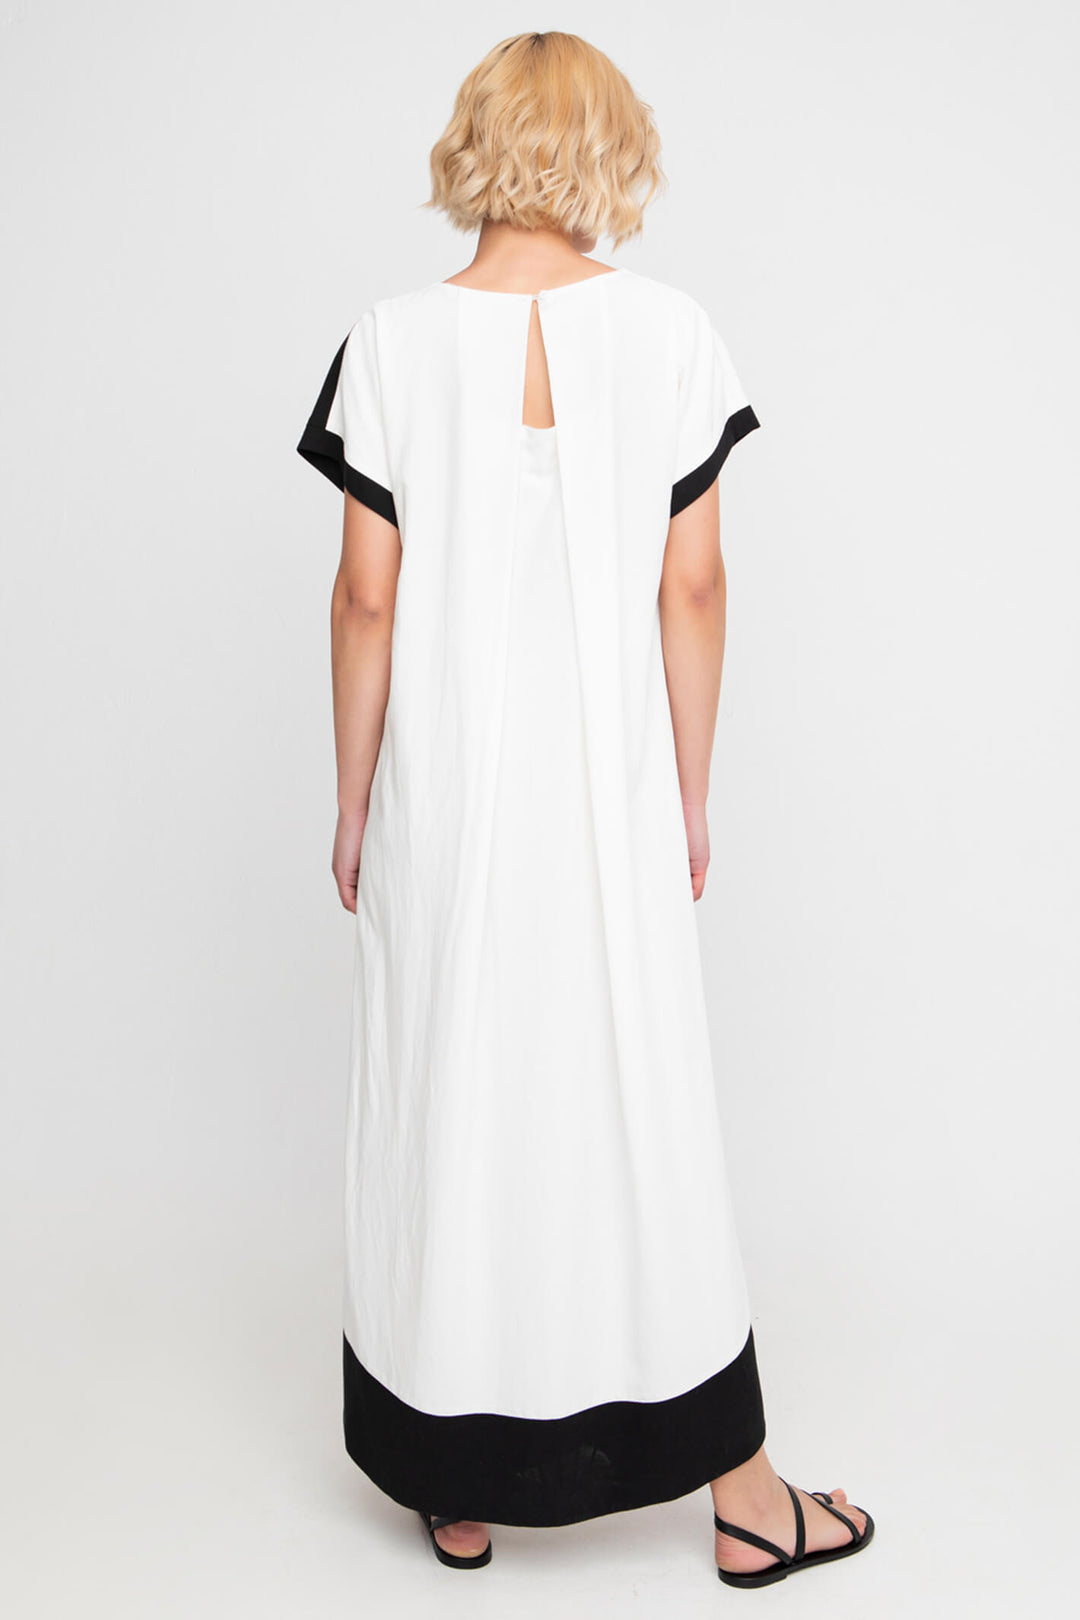 Ozai N Ku R22-216 Black & White Block Dress - Experience Boutique